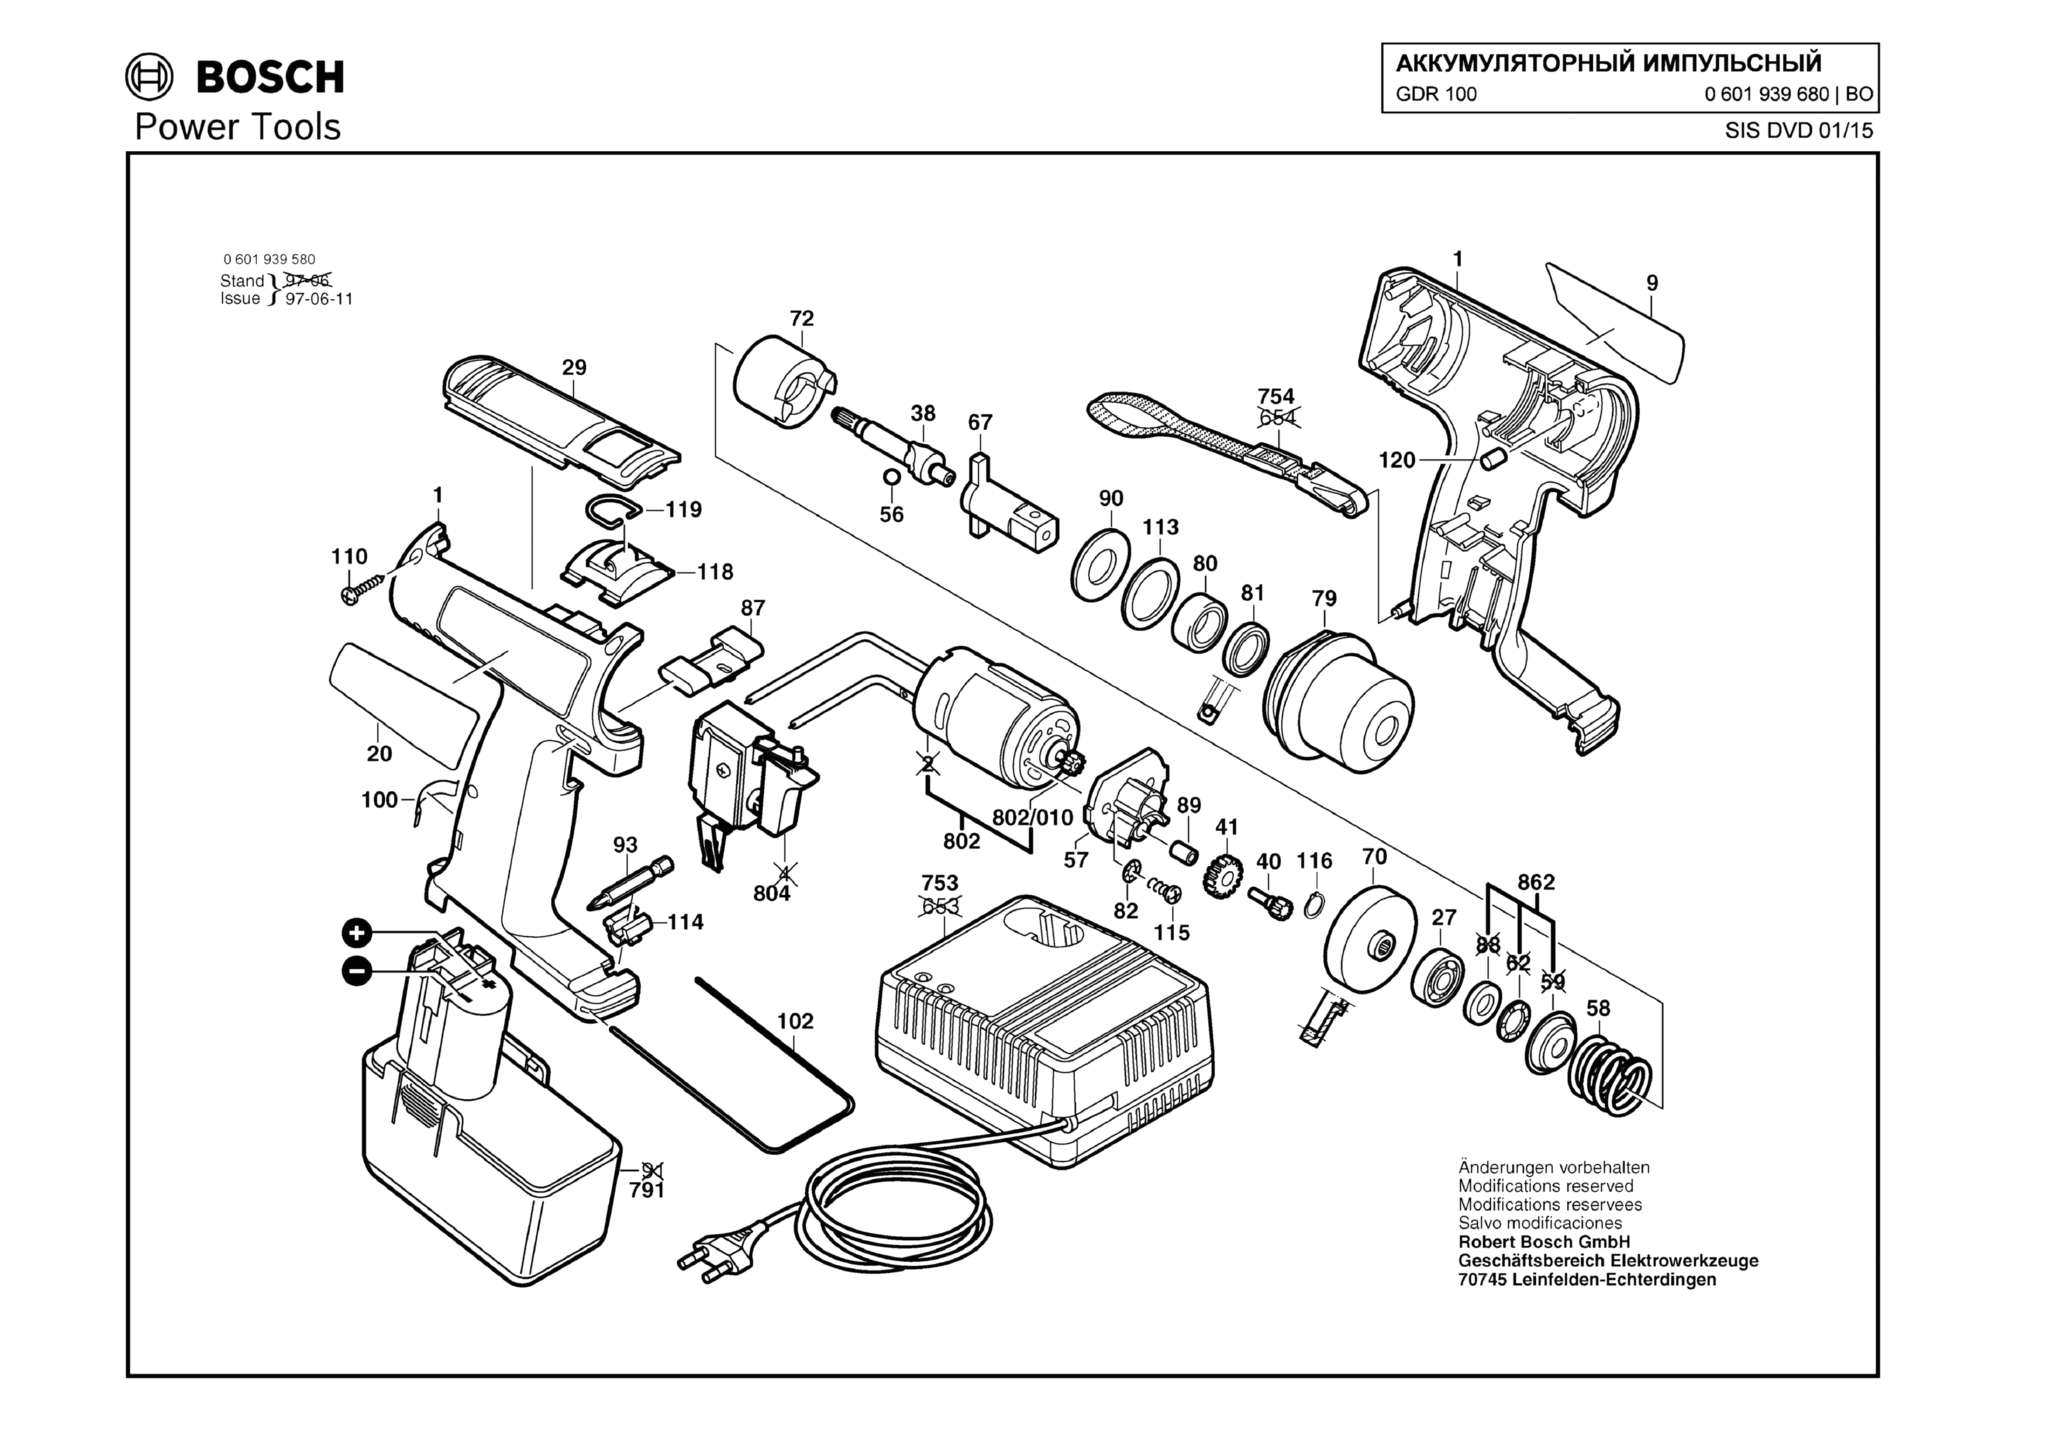 Запчасти, схема и деталировка Bosch GDR 100 (ТИП 0601939680)